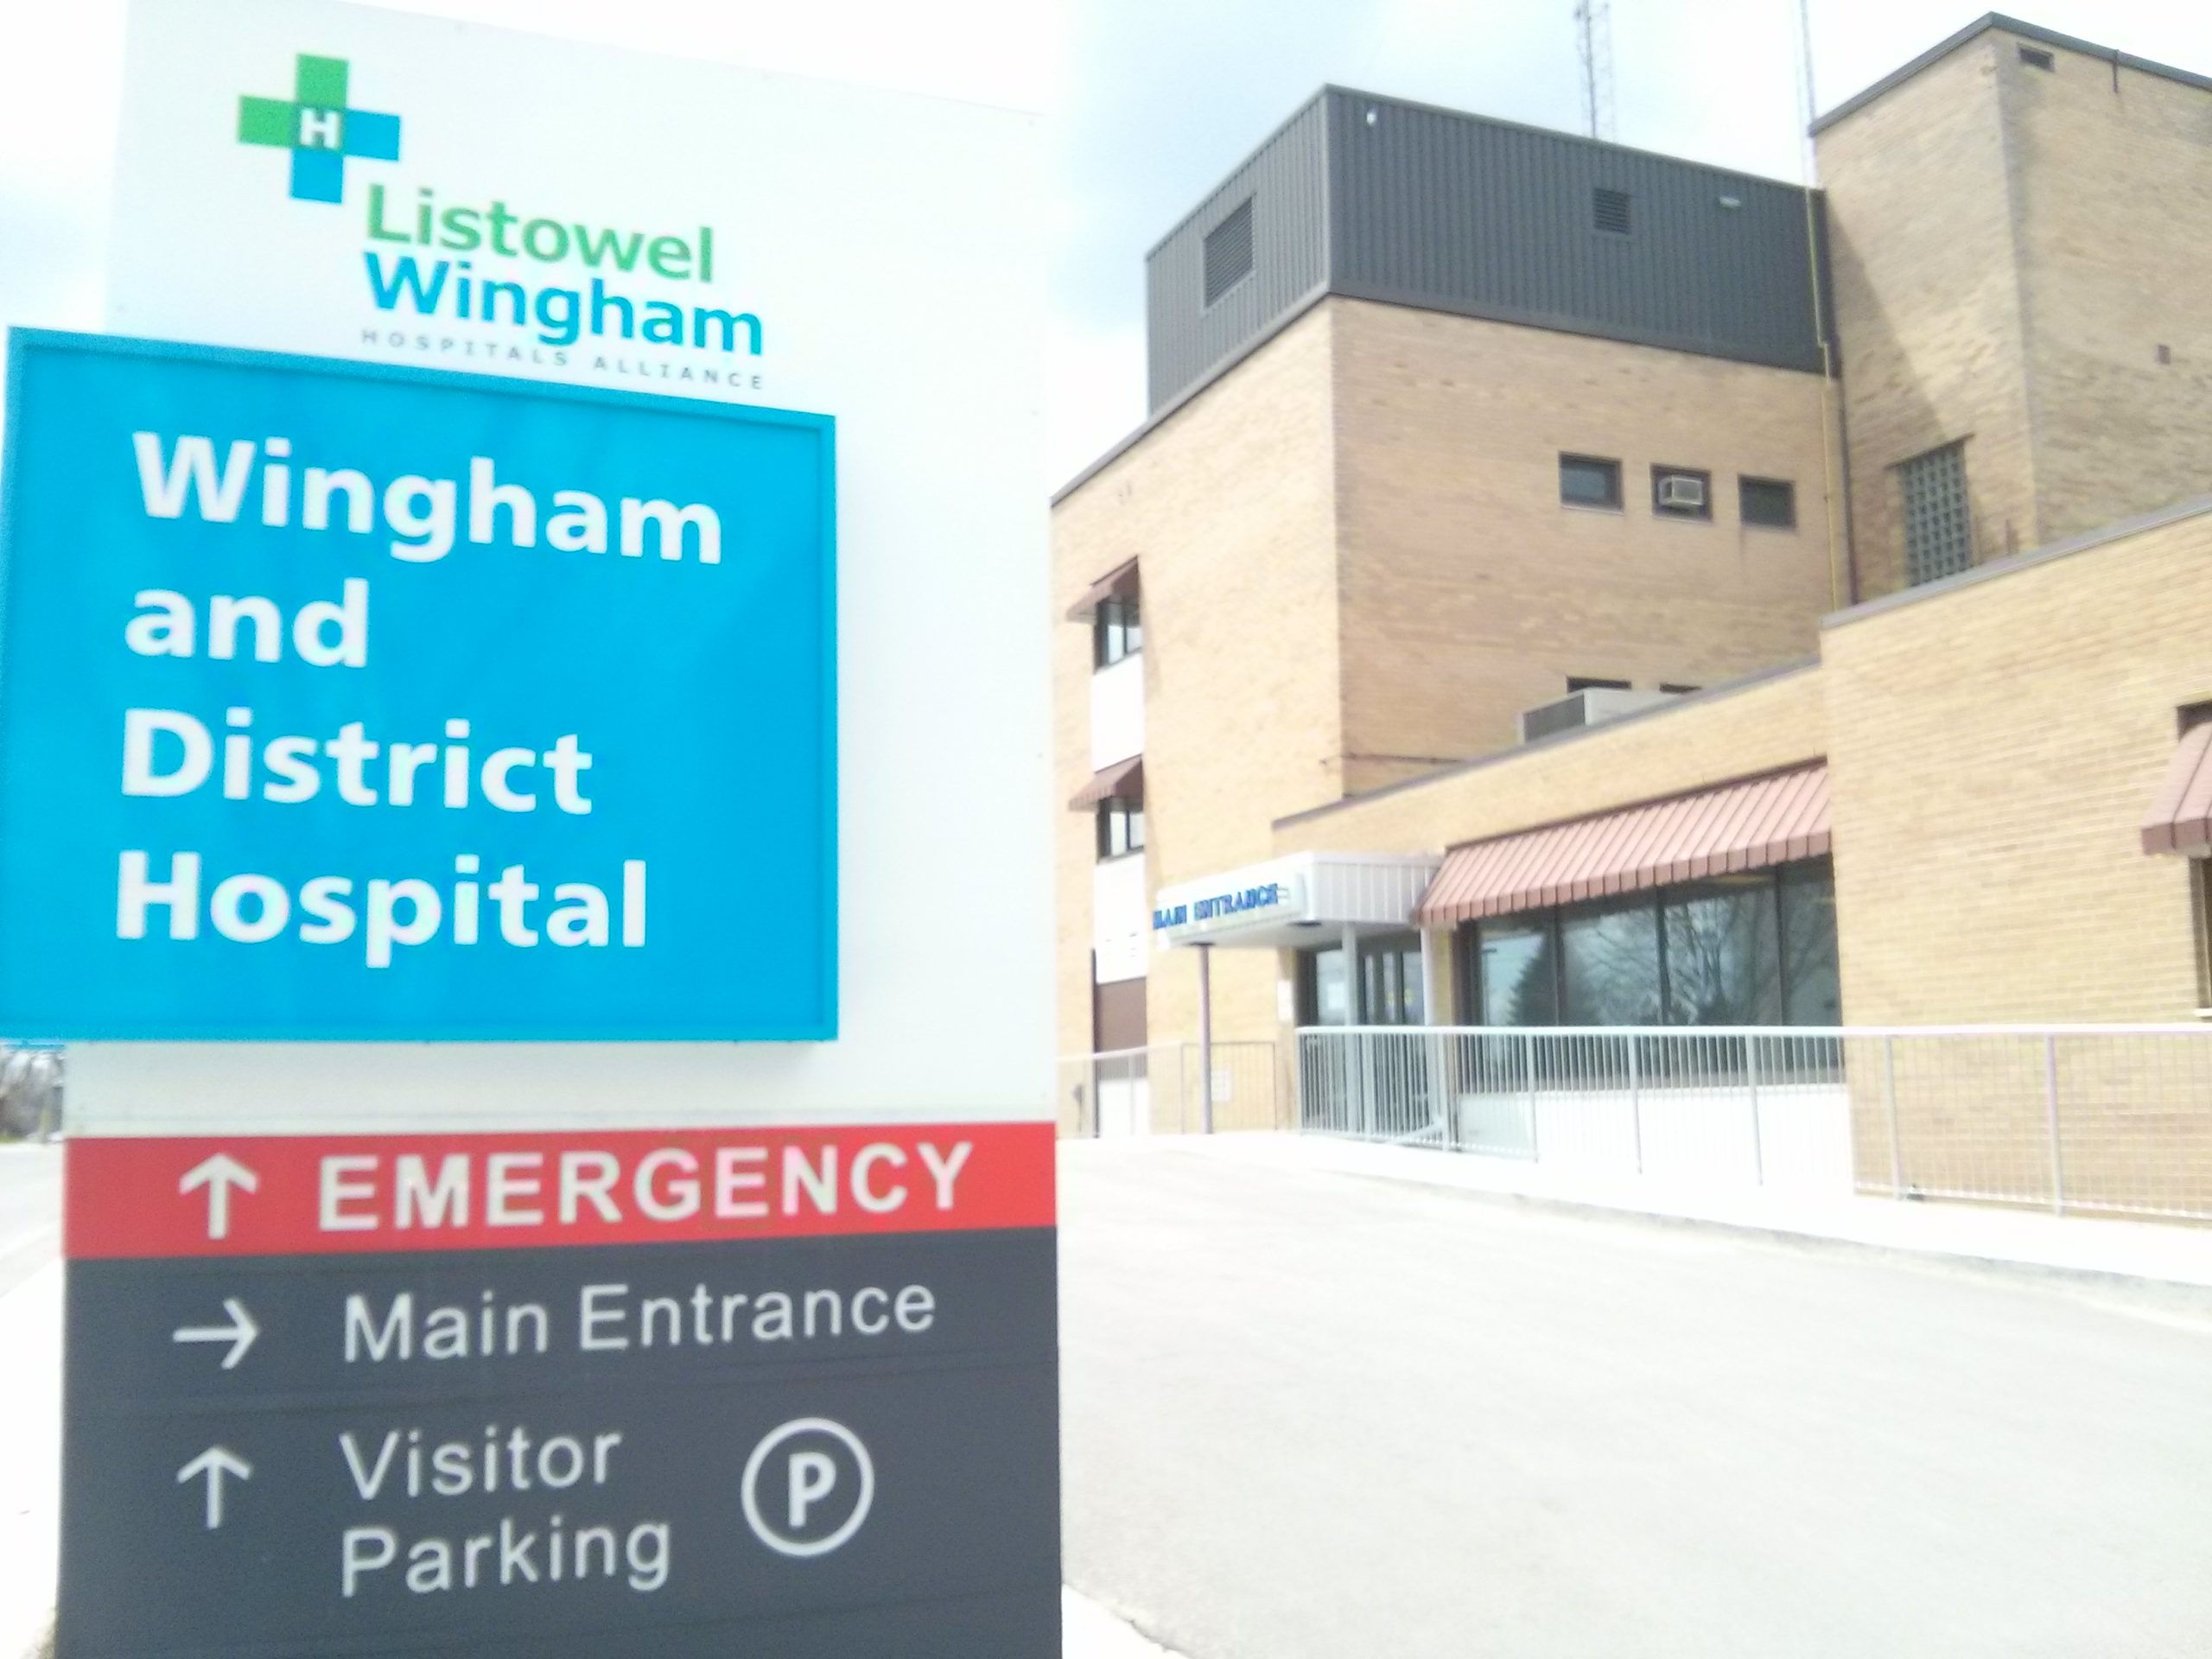 Listowel Wingham Hospitals Alliance announces ED closure